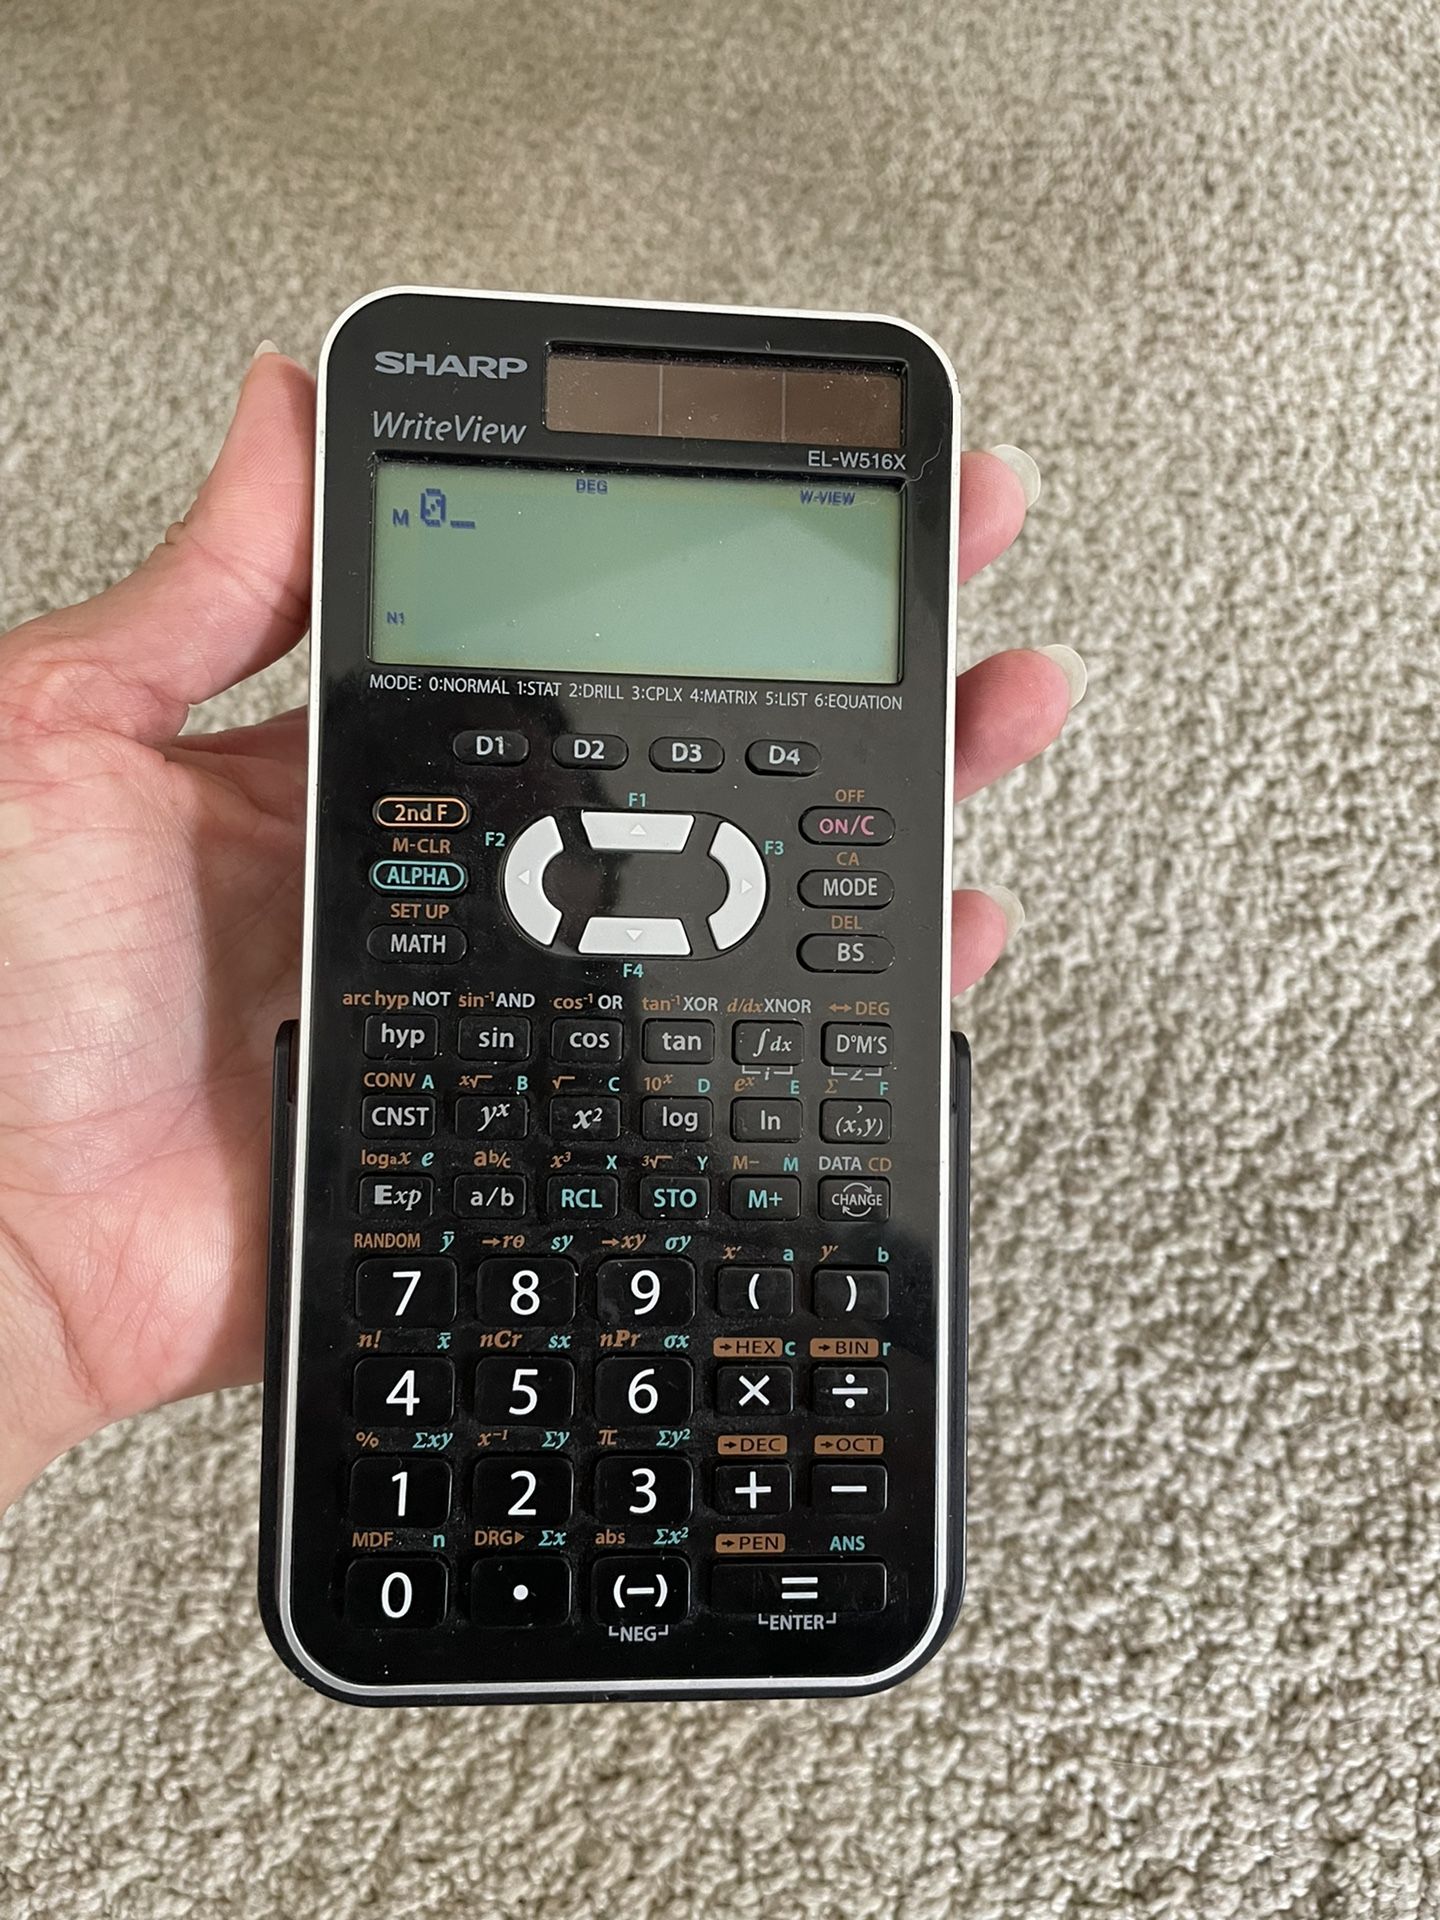 Sharp WriteView Calculator